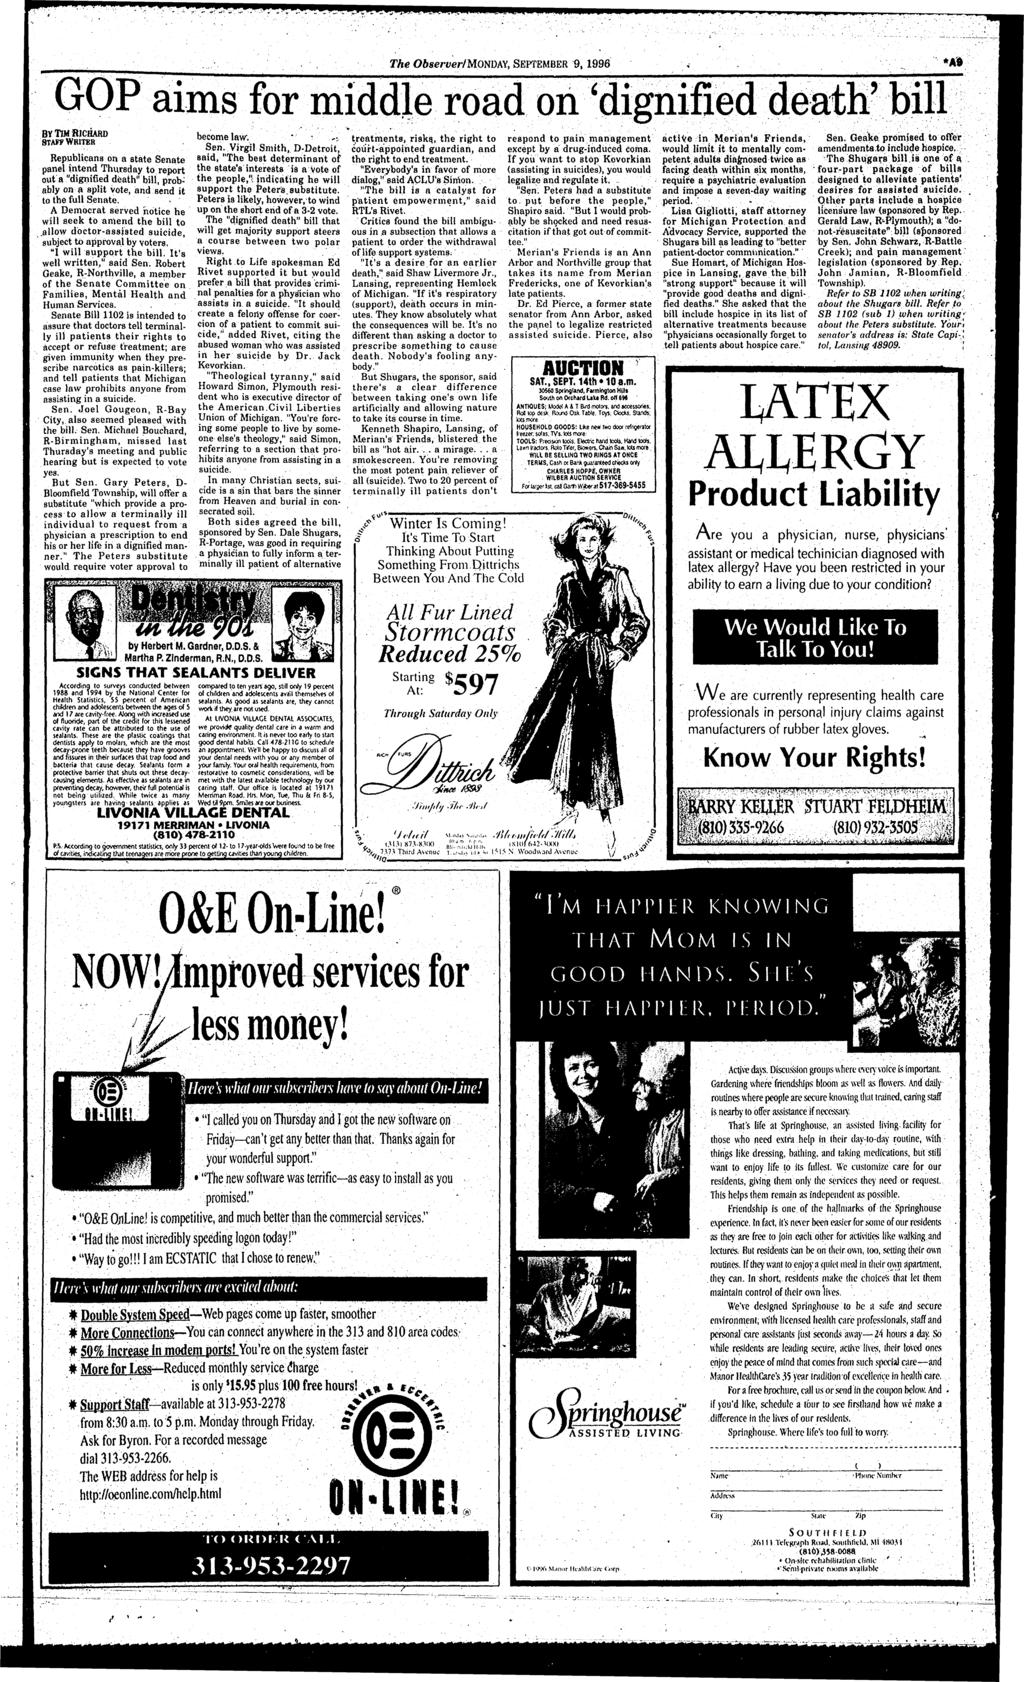 mrm-r!w*l!**» «1-11-. Th Observer/ MONDAY, SEPTEMBER 9, 1996 *A?